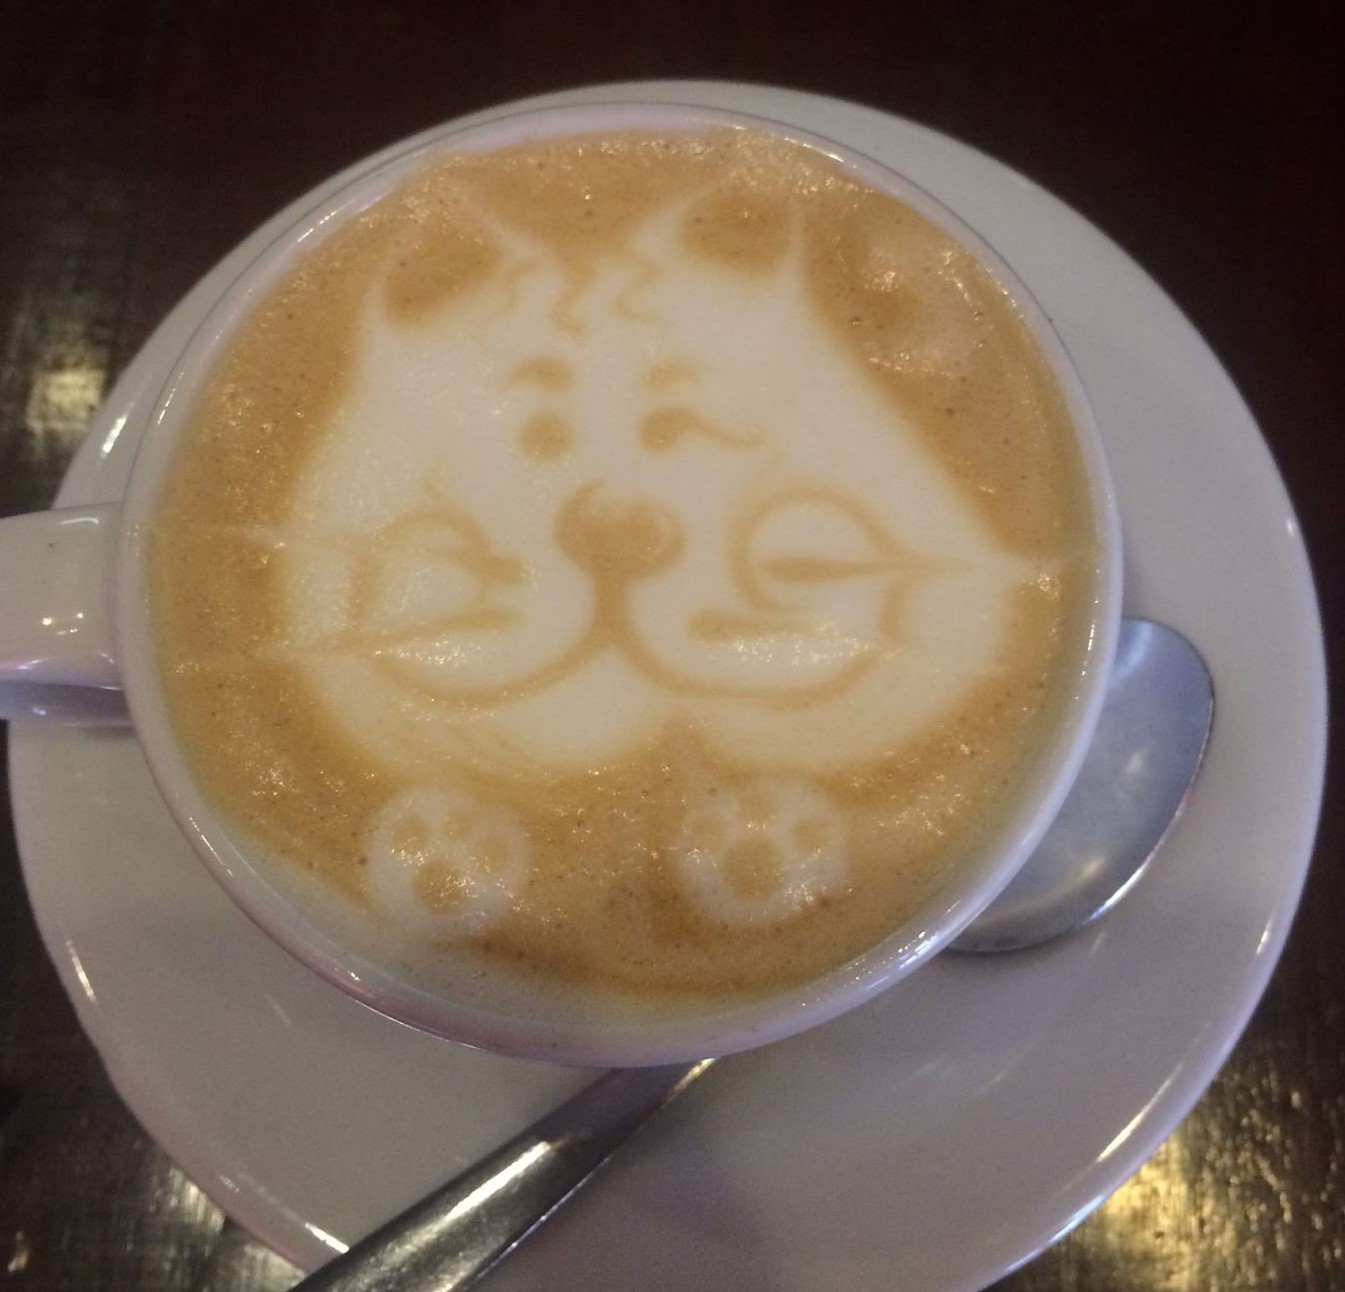 Latte with impressive cat art. Bogota, Sept. 2017